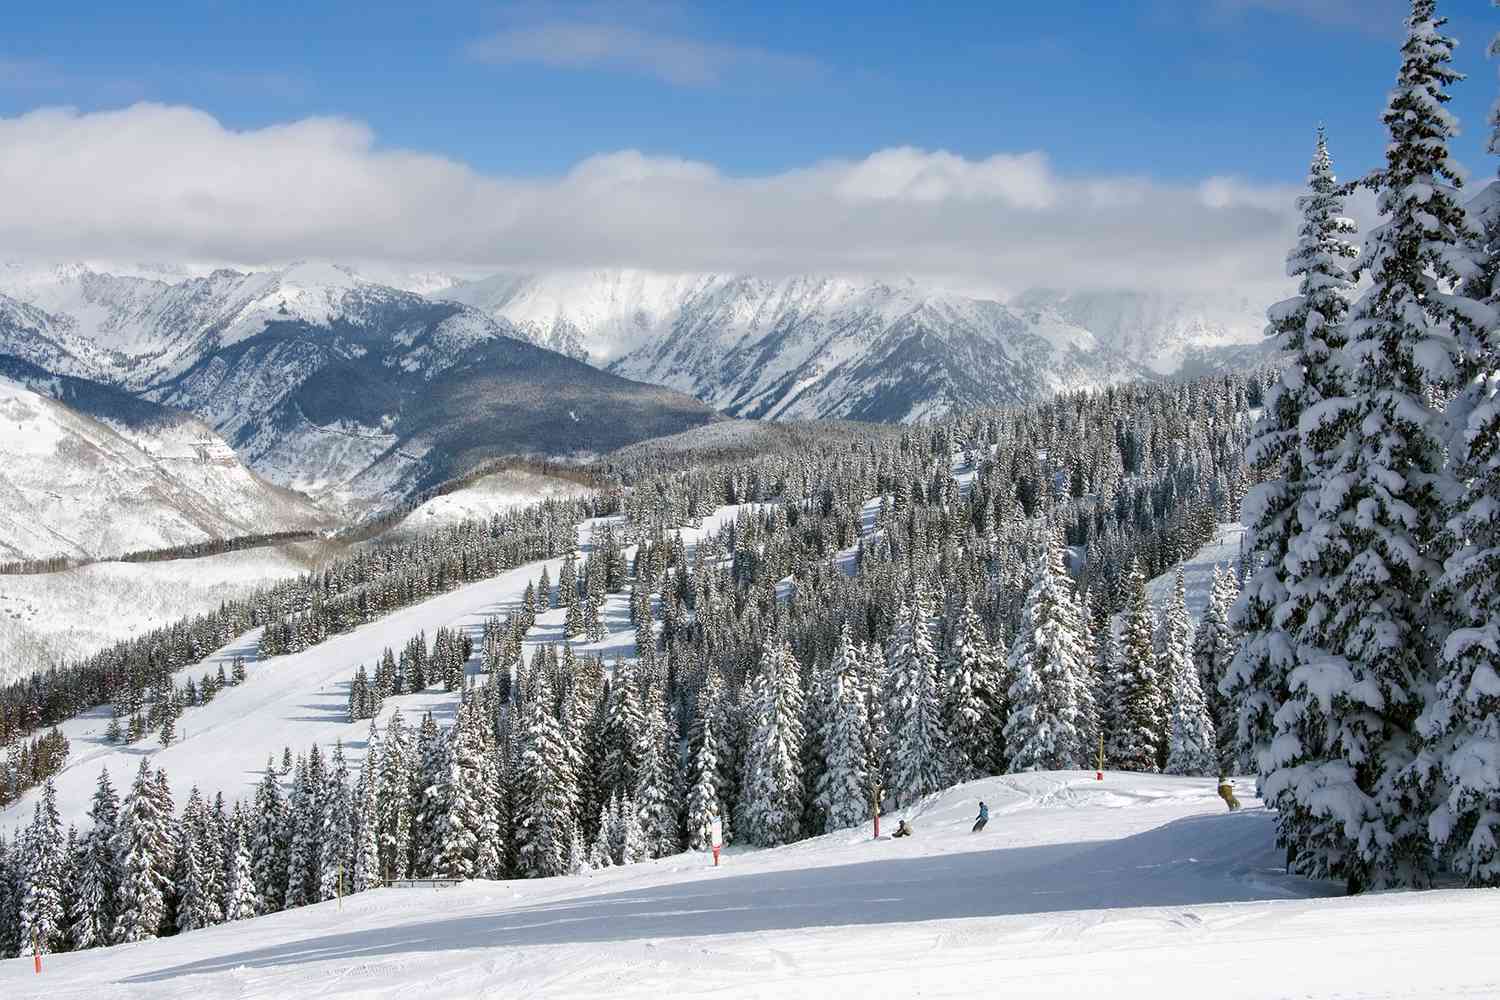 Snowboarders à Vail, Colorado, en hiver